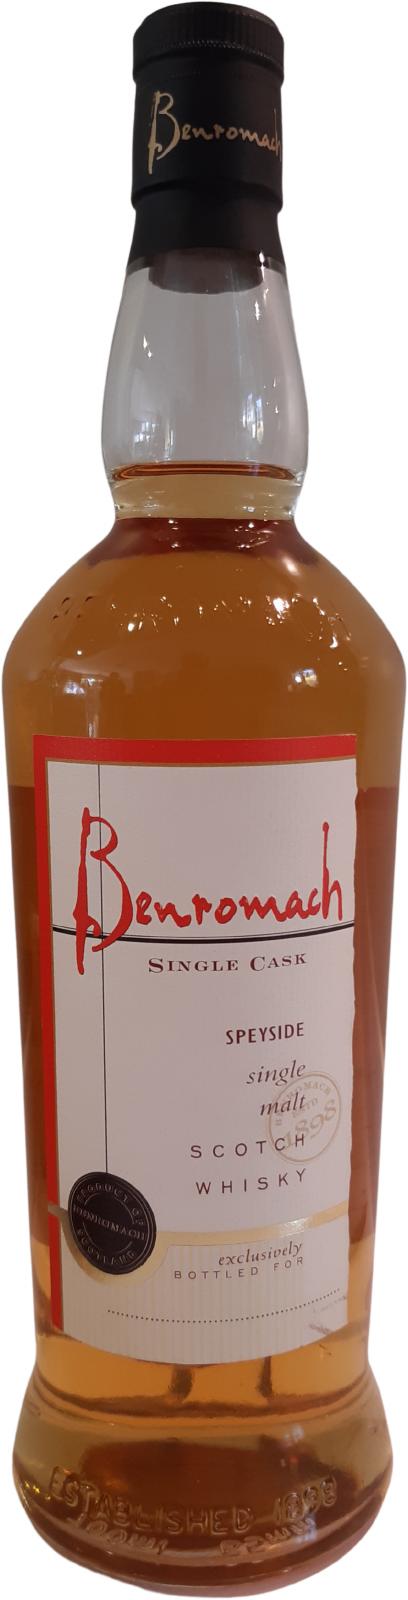 Benromach 2000 Distillery Only Handbottled 1st Fill Bourbon Barrel #121 60.6% 700ml